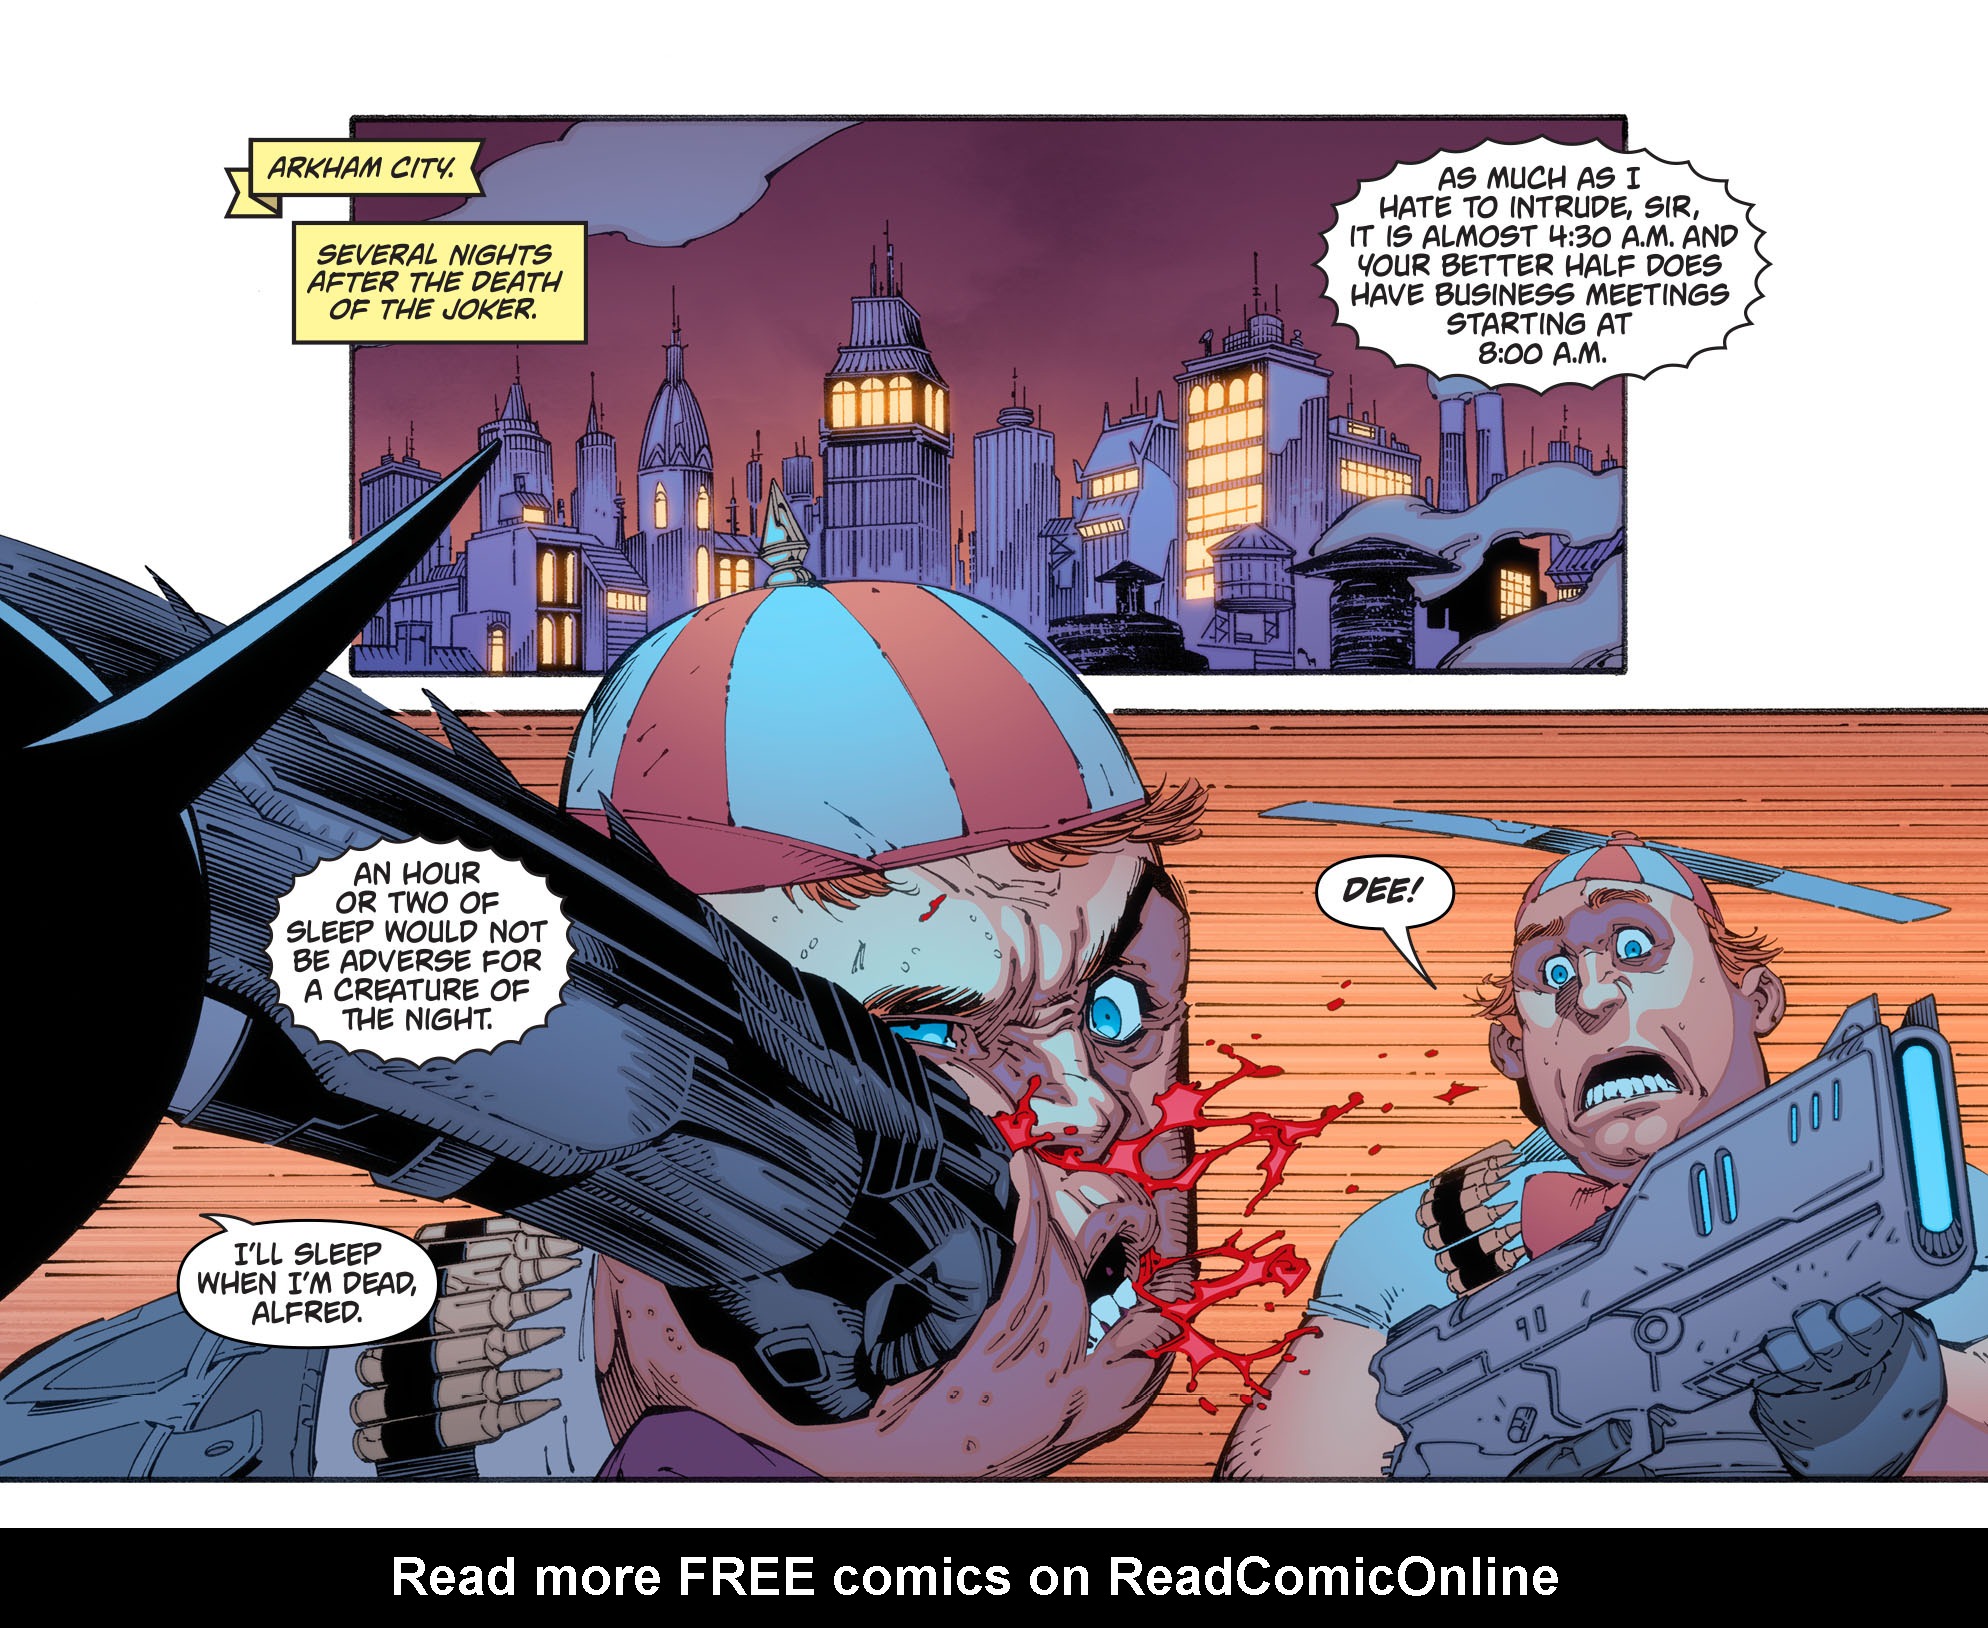 Batman Arkham Knight I Issue 2 | Read Batman Arkham Knight I Issue 2 comic  online in high quality. Read Full Comic online for free - Read comics  online in high quality .|